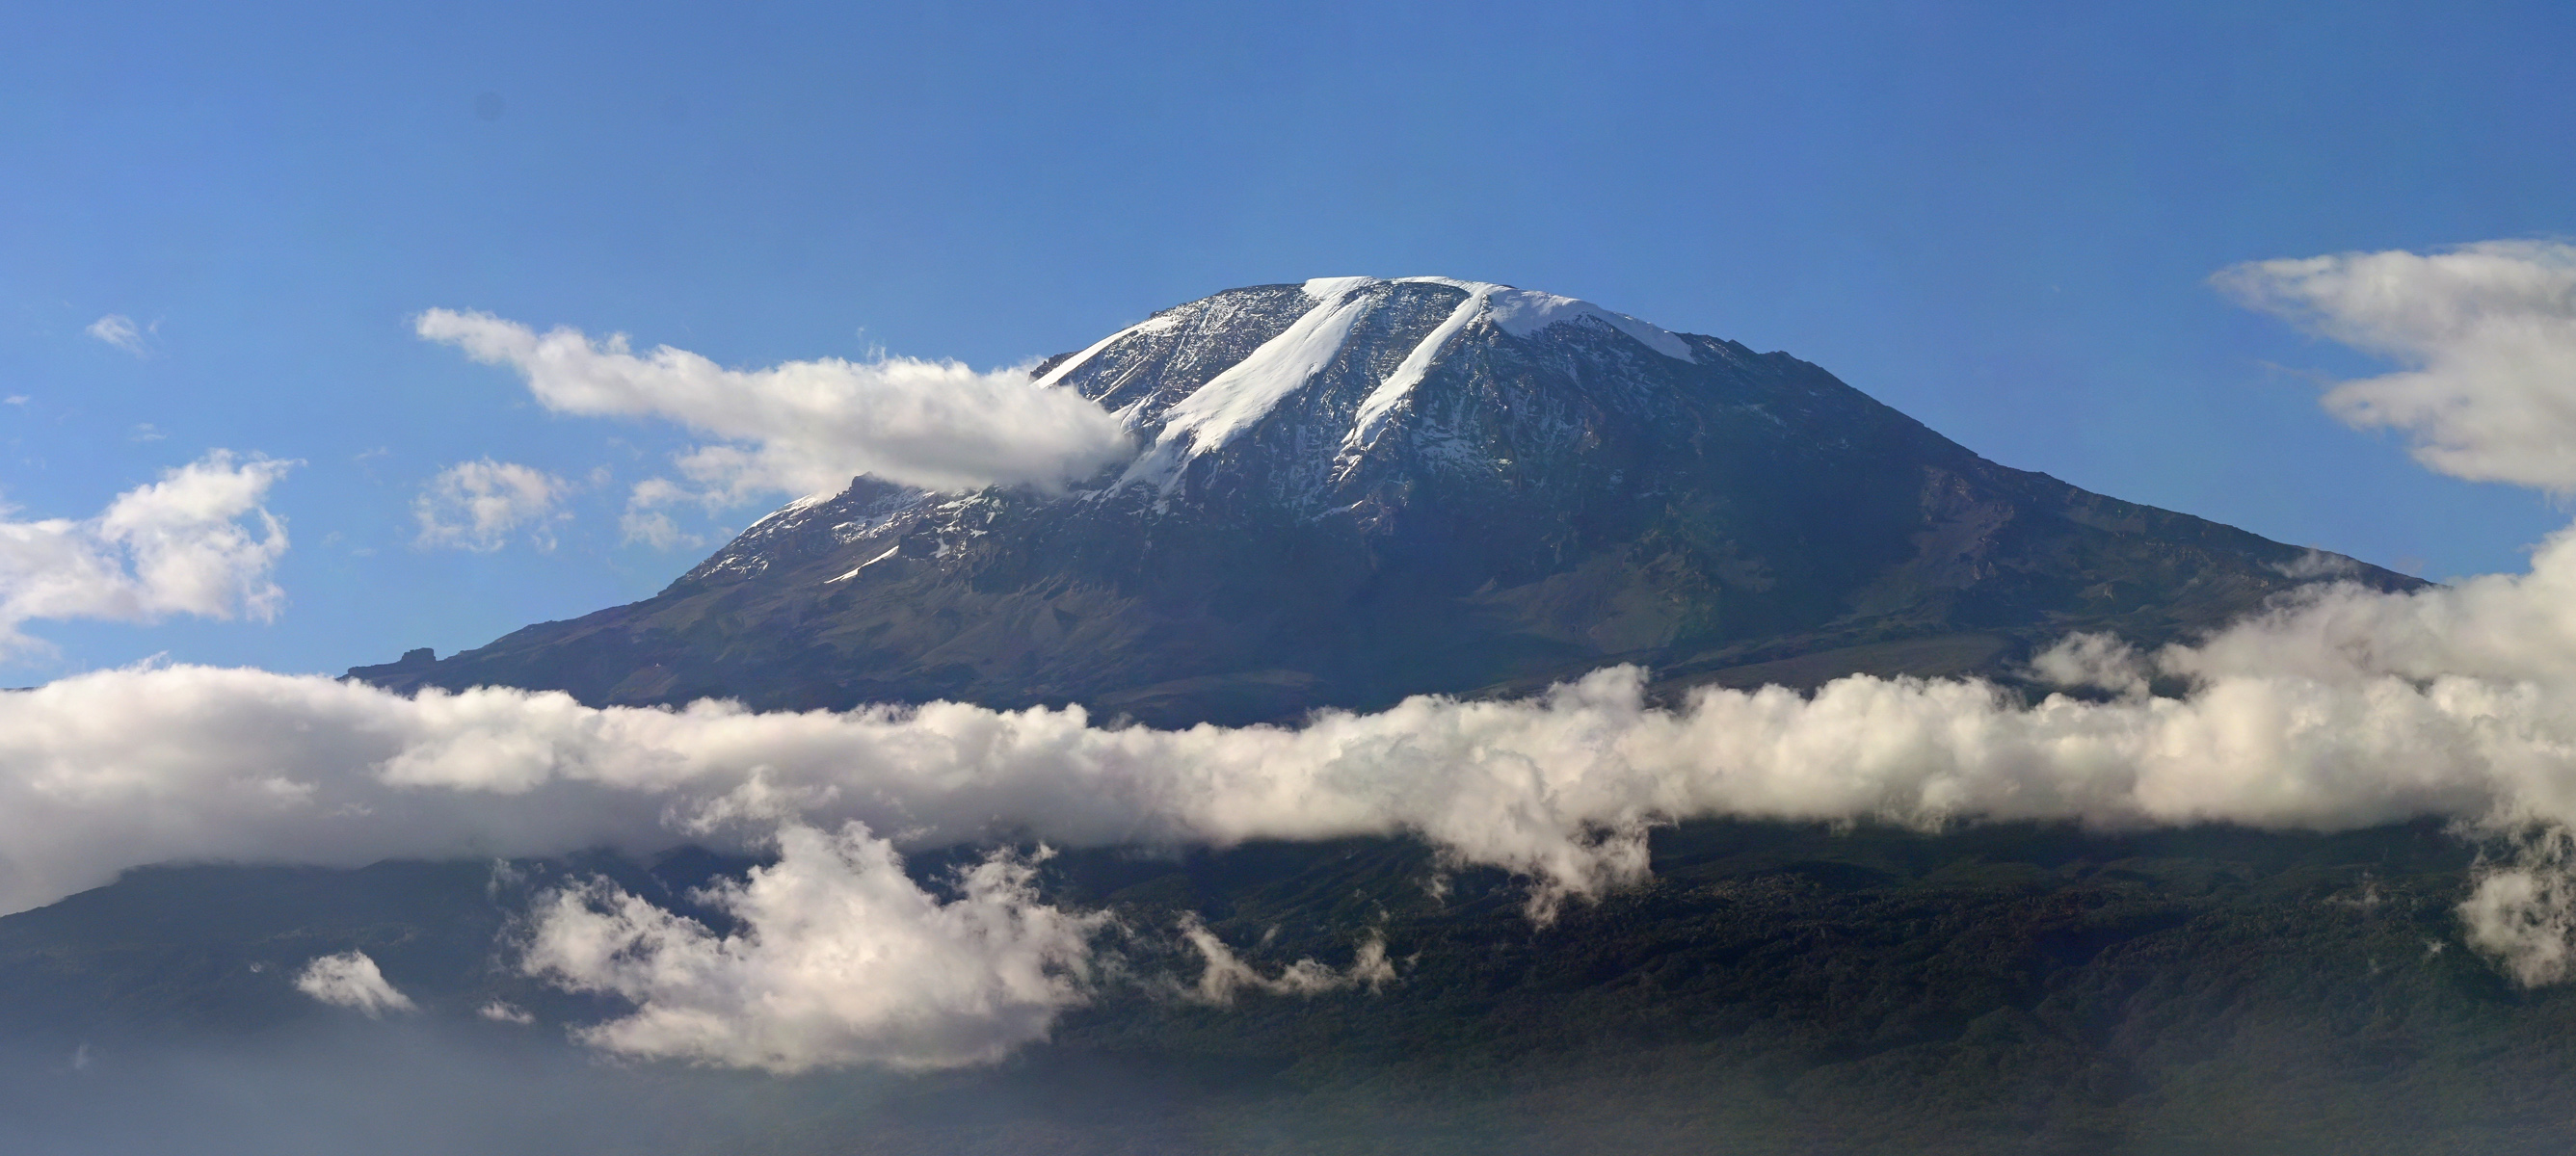 Mount_Kilimanjaro